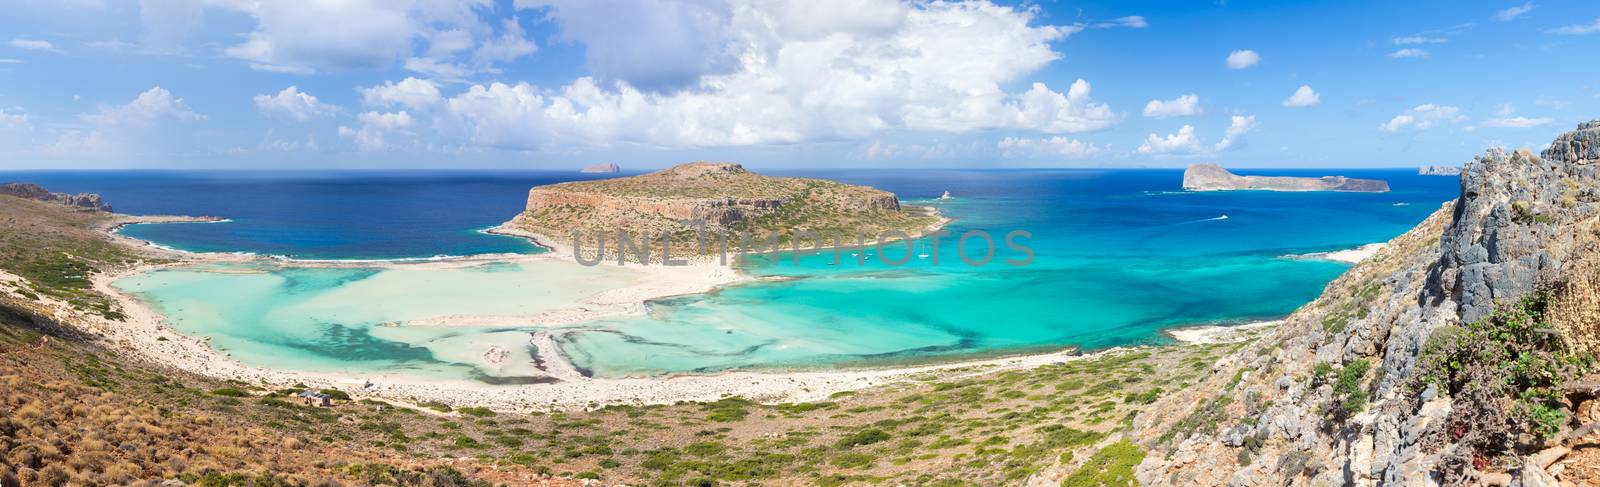 Balos beach at Crete island in Greece by kasto